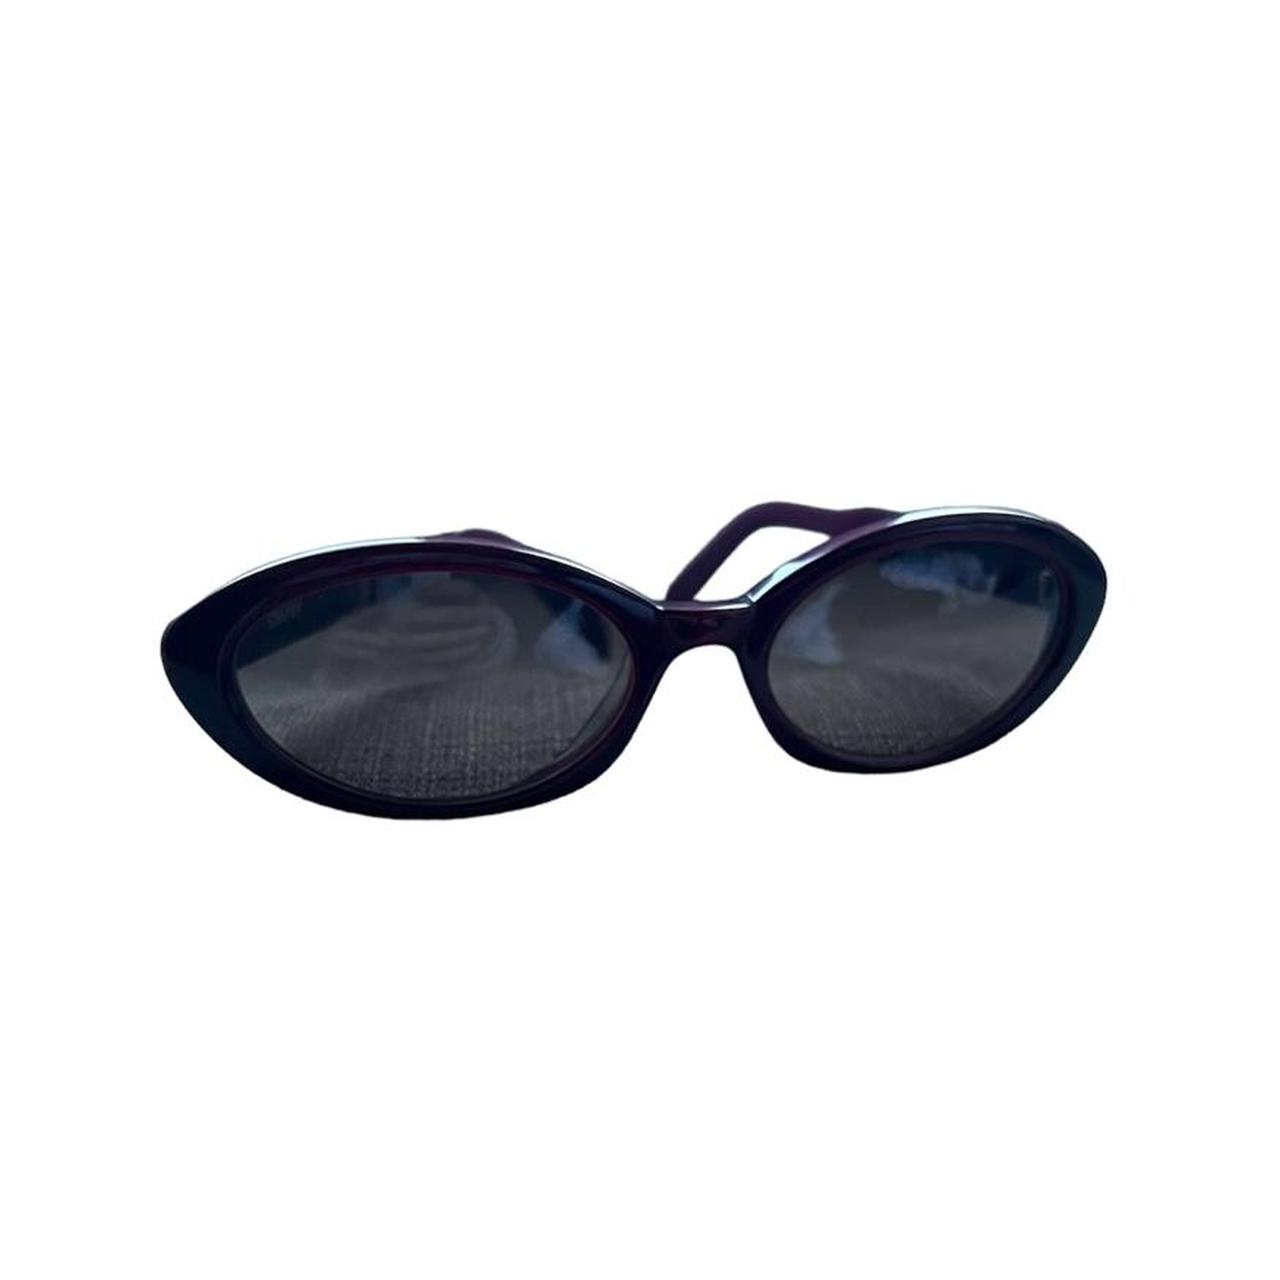 DKNY Women's Sunglasses (2)